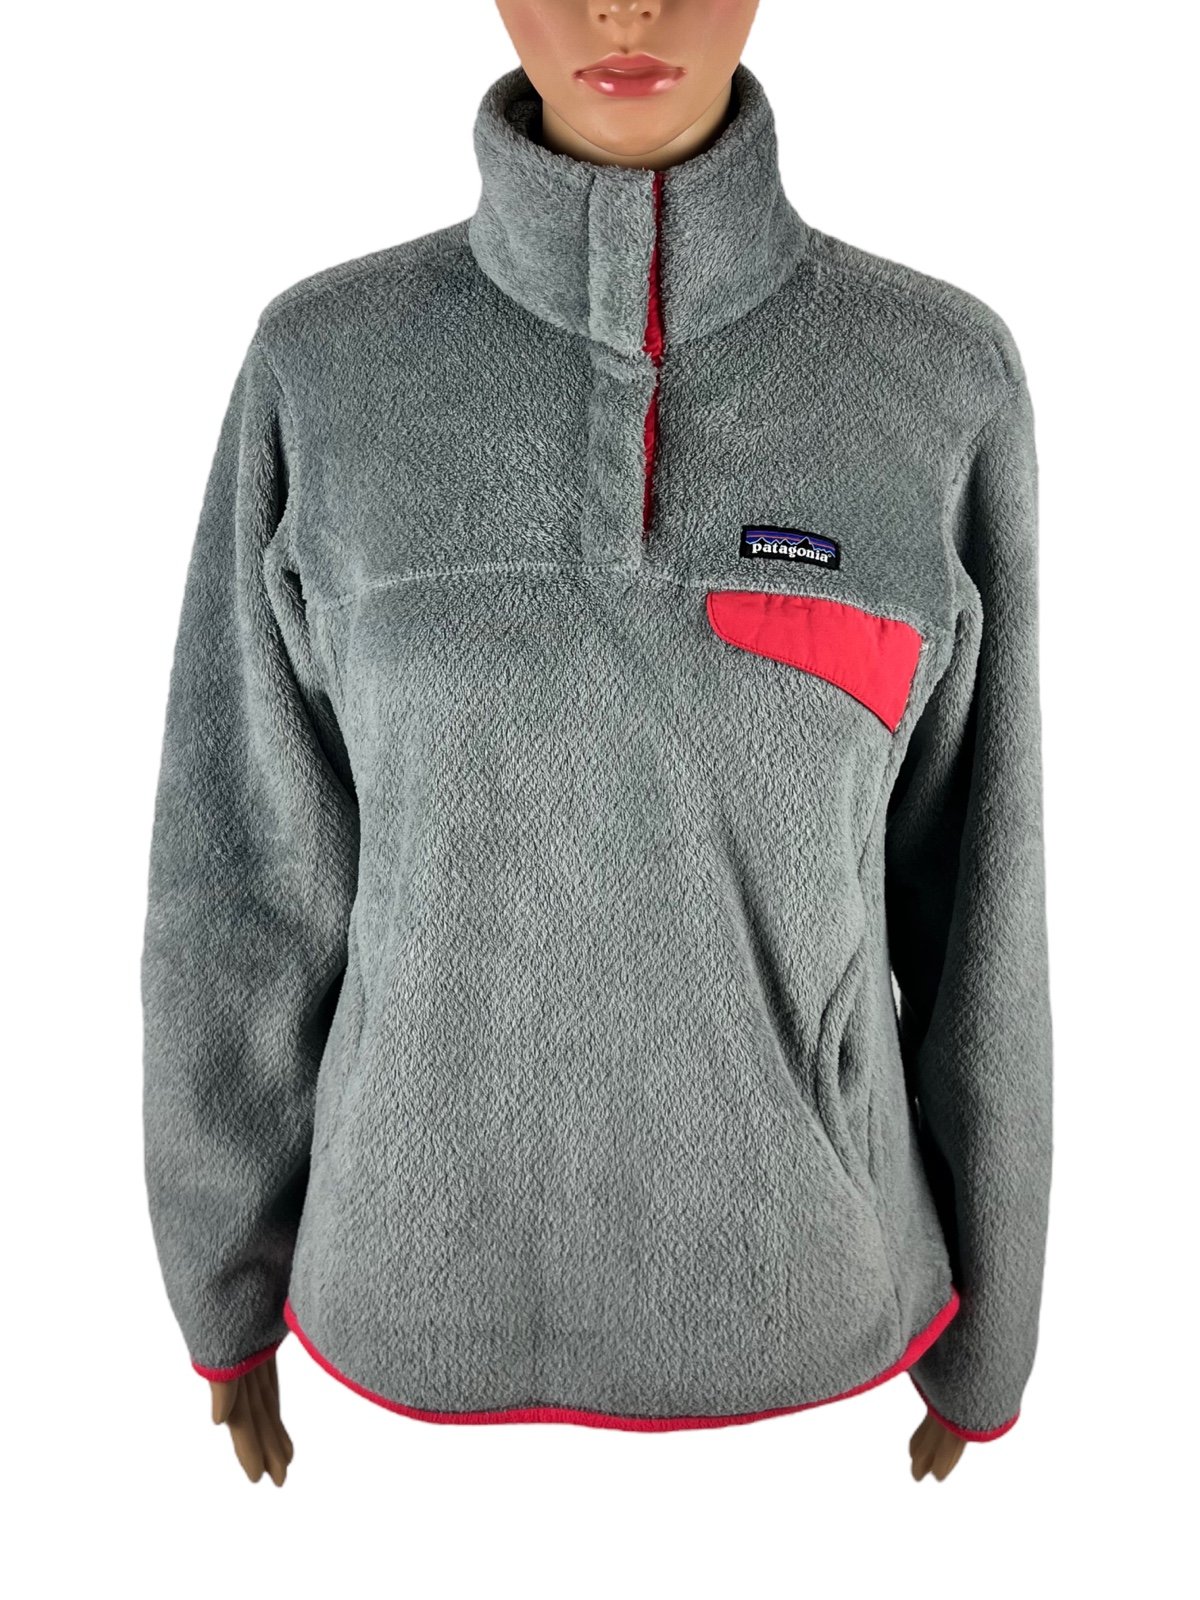 Comfortable Patagonia Womens Medium Pullover Re Tool Snap T Fleece Jacket Gray 25442 EUC LHoTh0sXD Factory Price